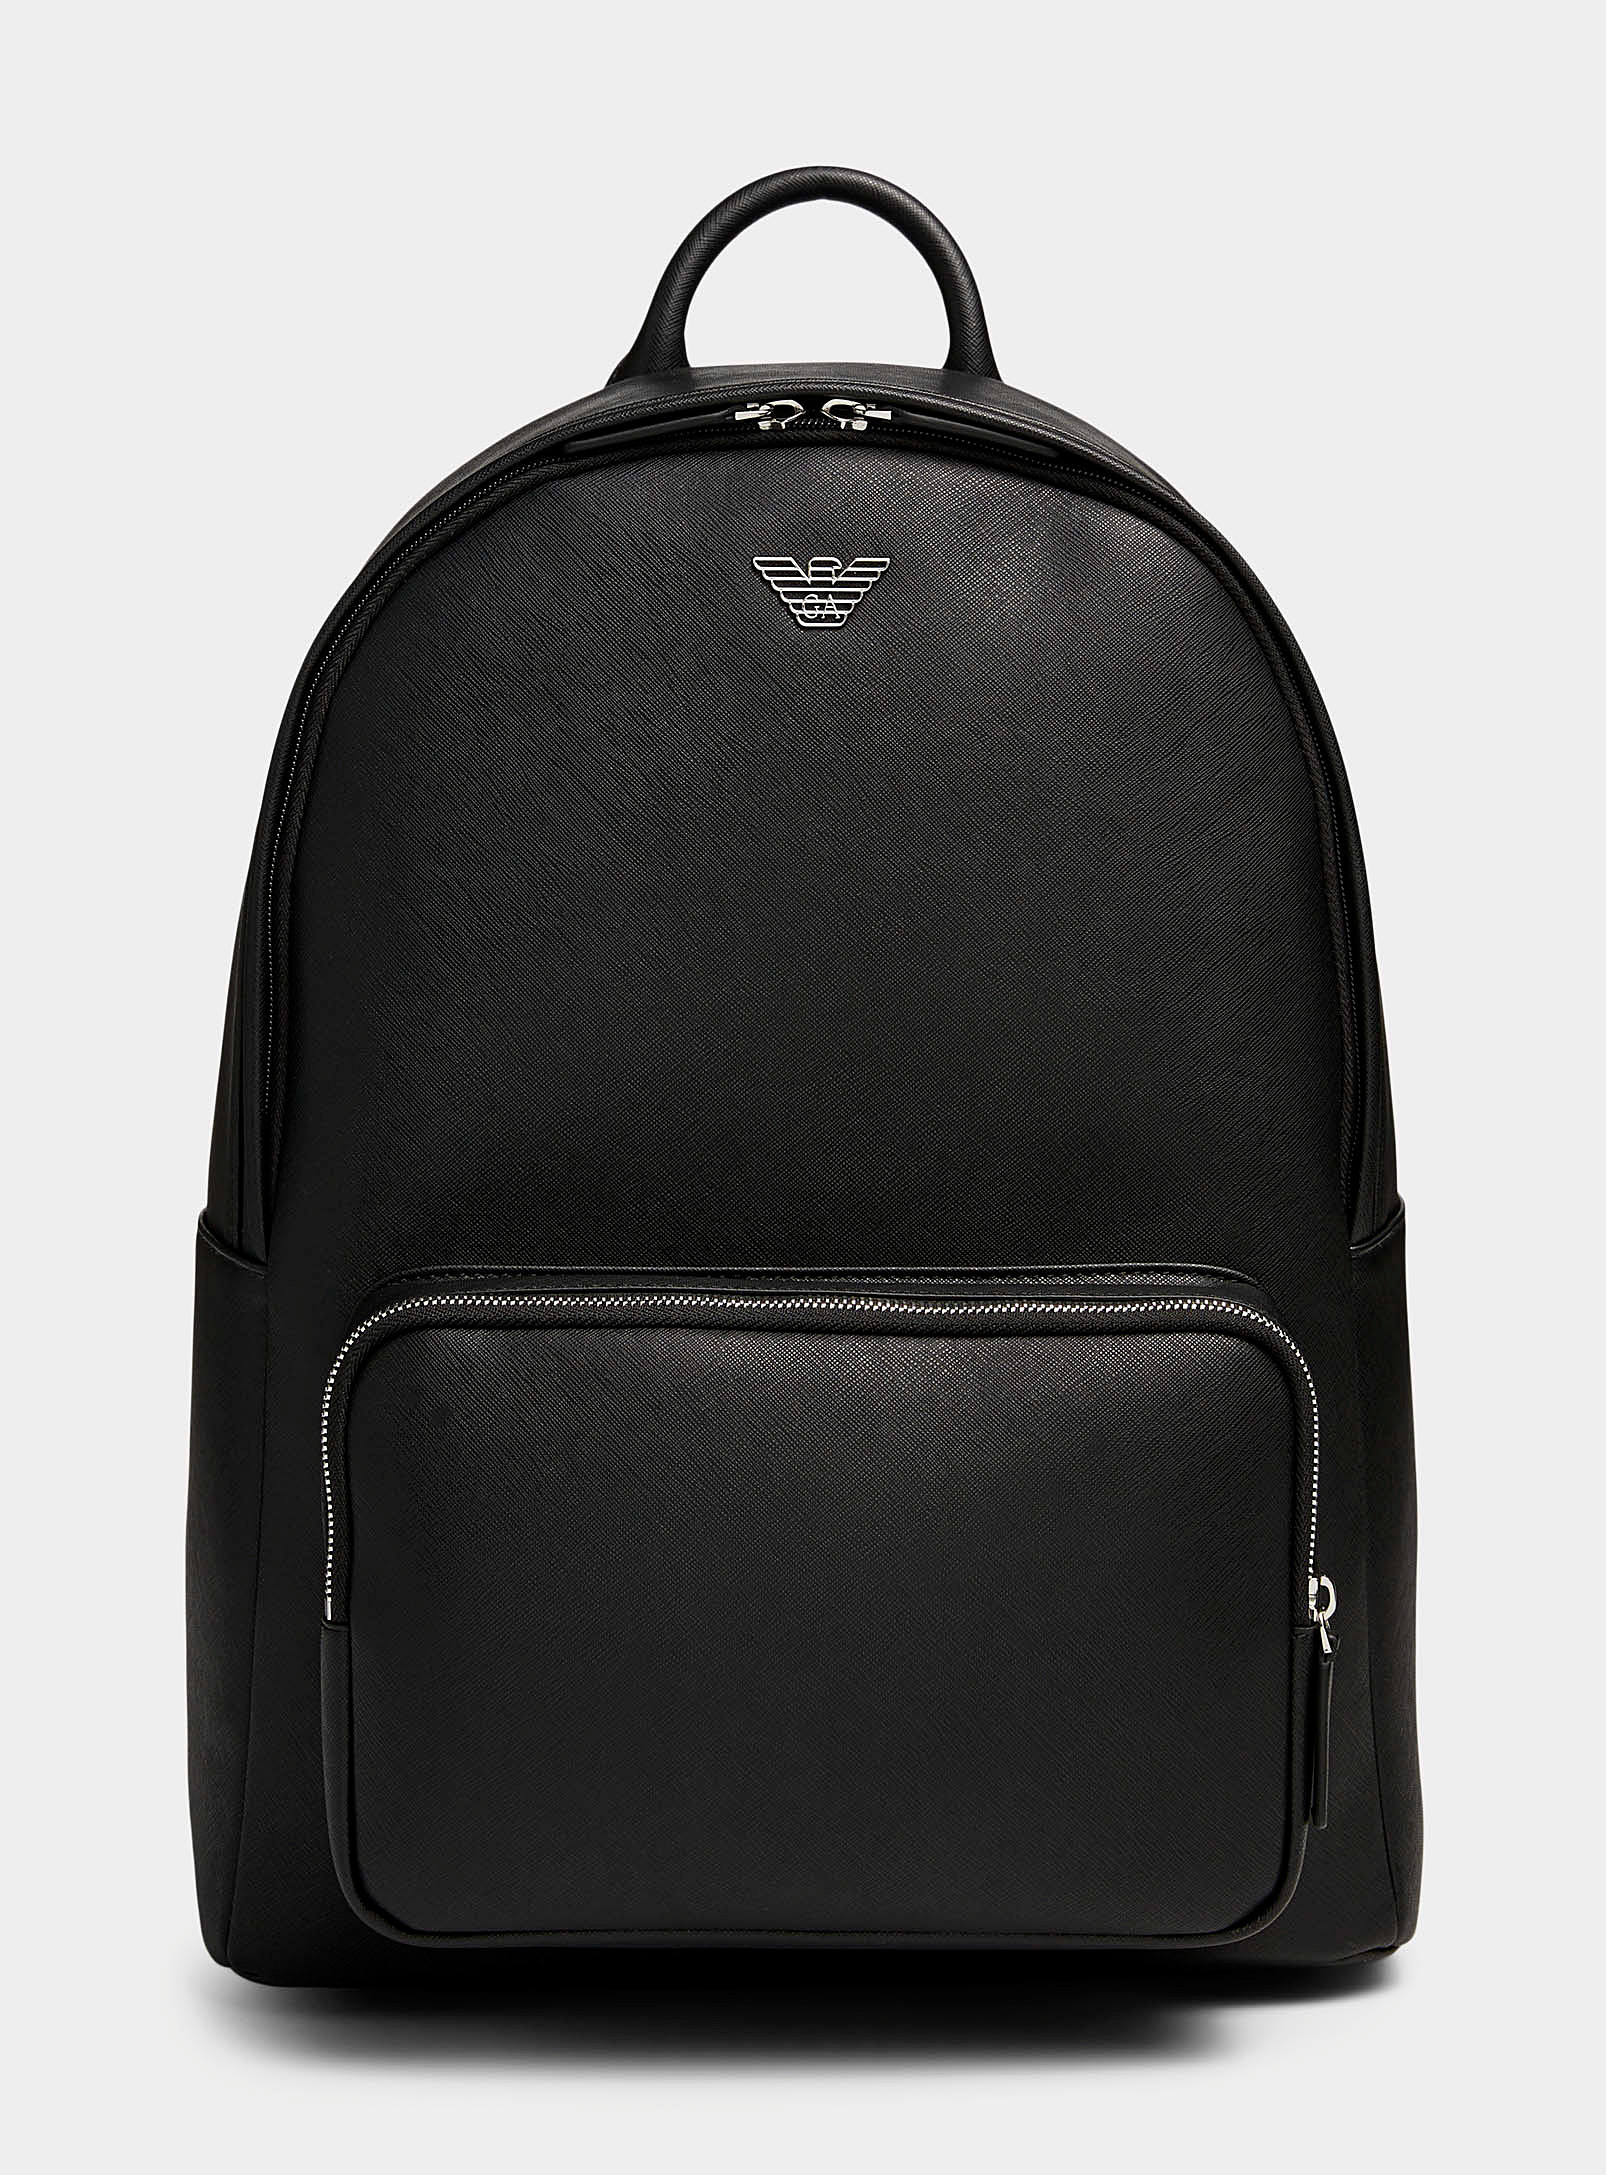 Emporio Armani - Men's Minimalist metallic logo backpack